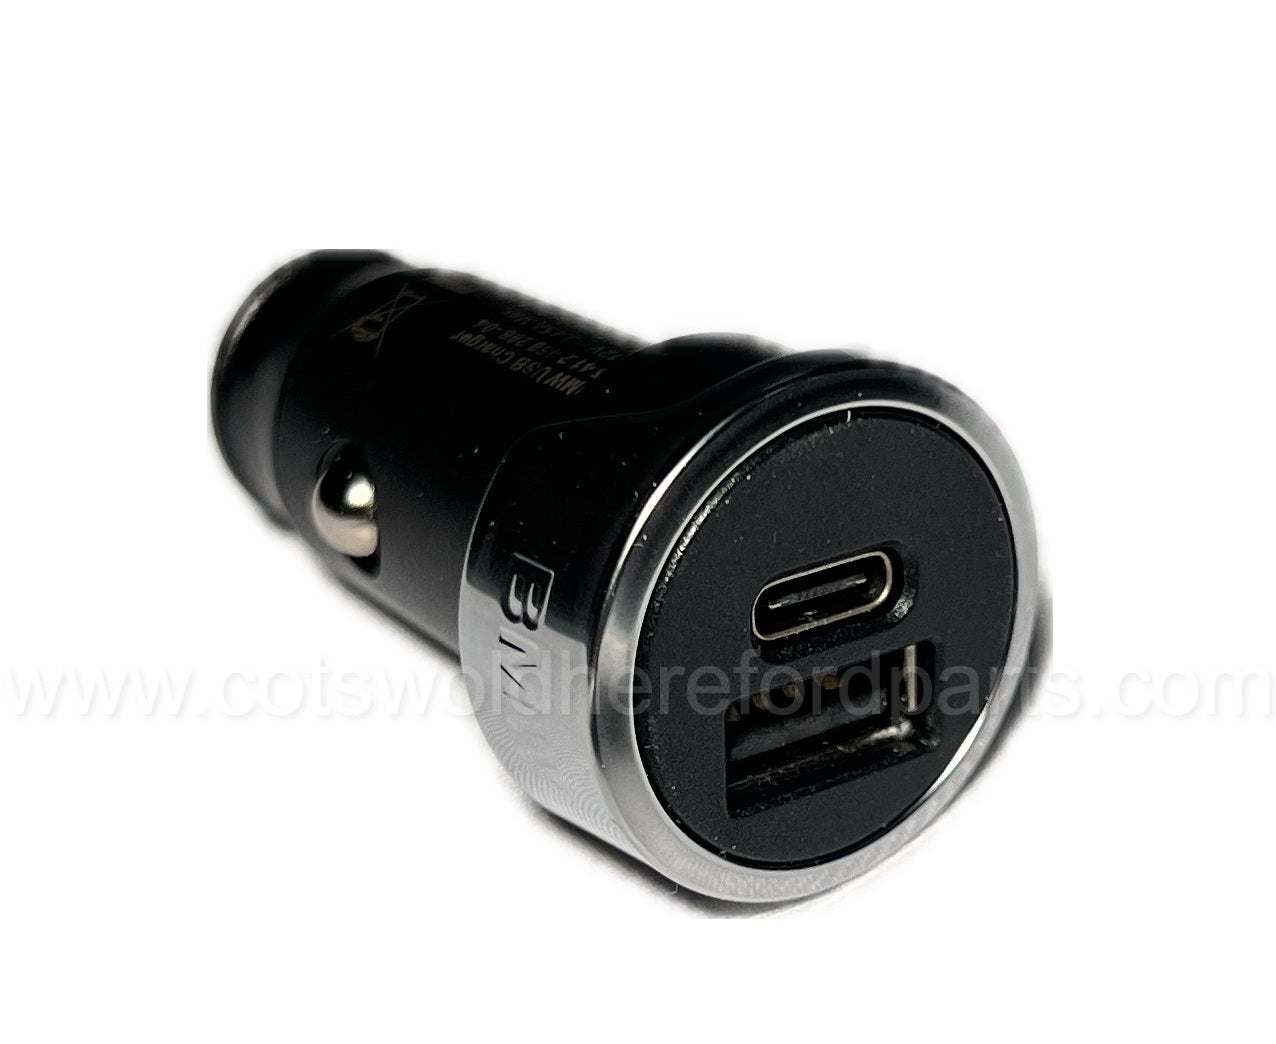 Genuine BMW Dual USB Charger For Types A & C 12v Cigarette Lighter 65412458286